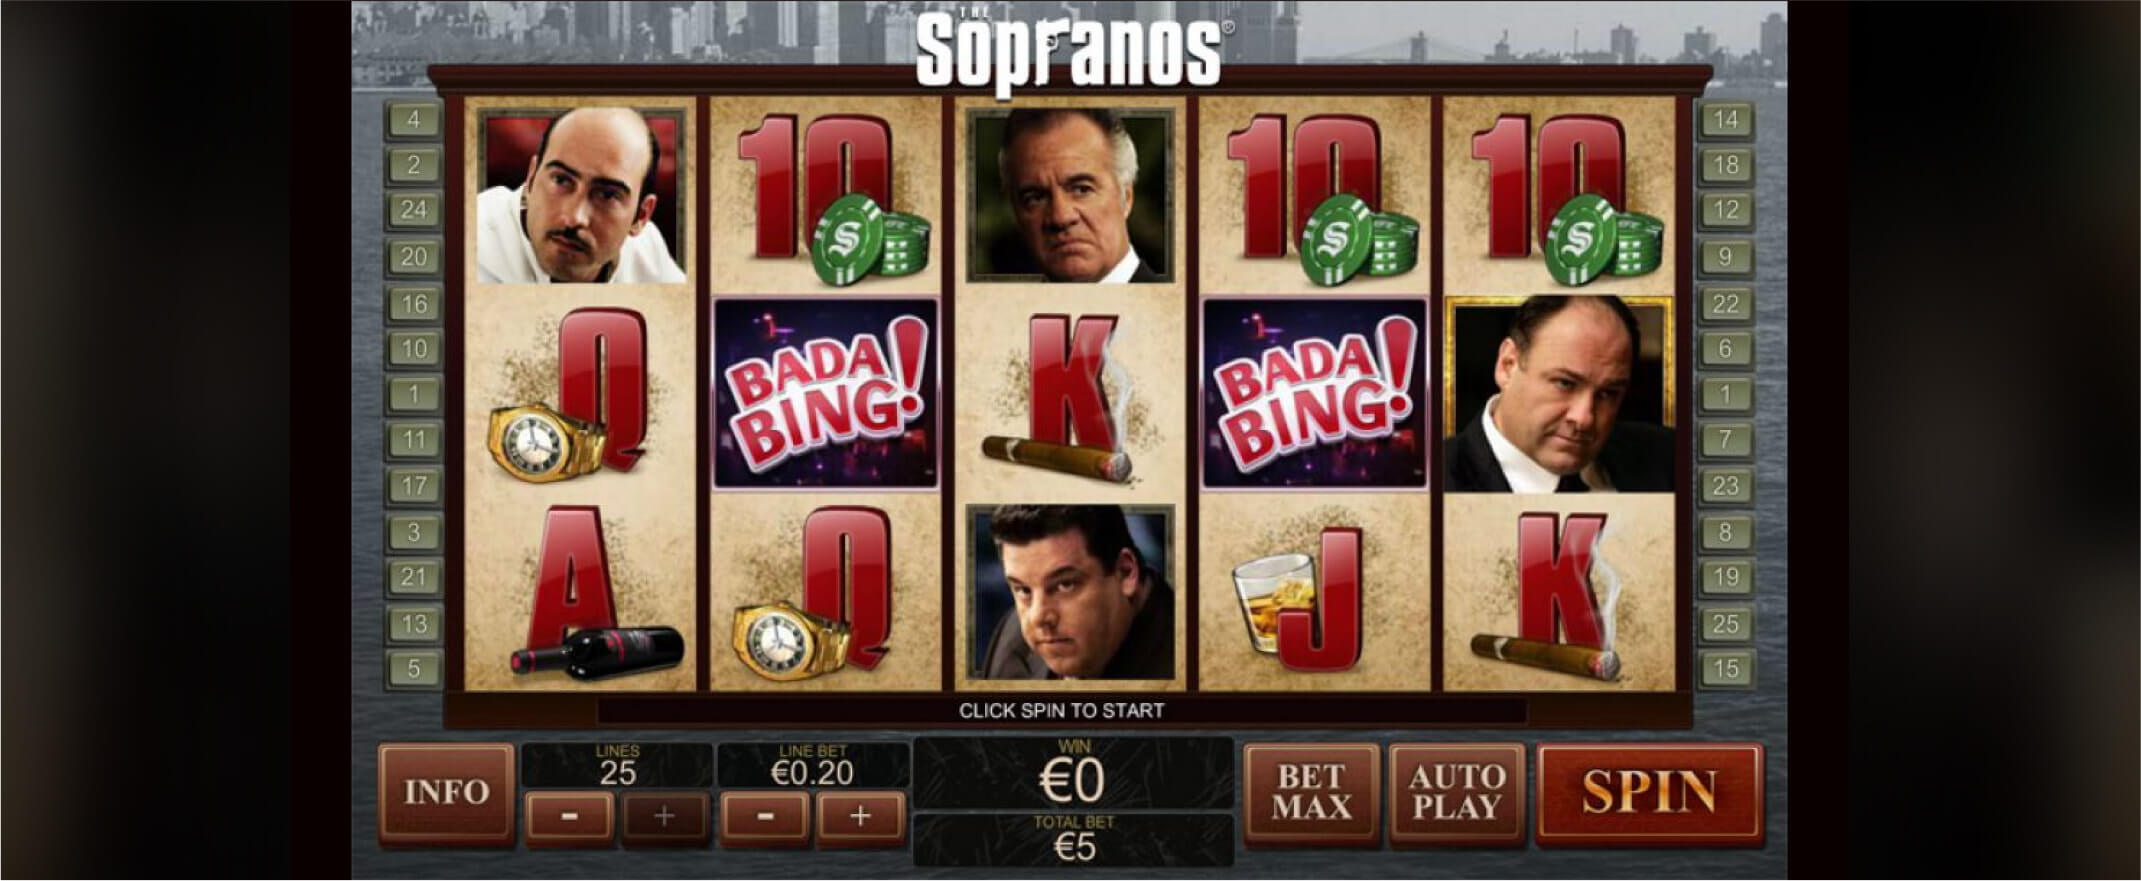 The Sopranos slot